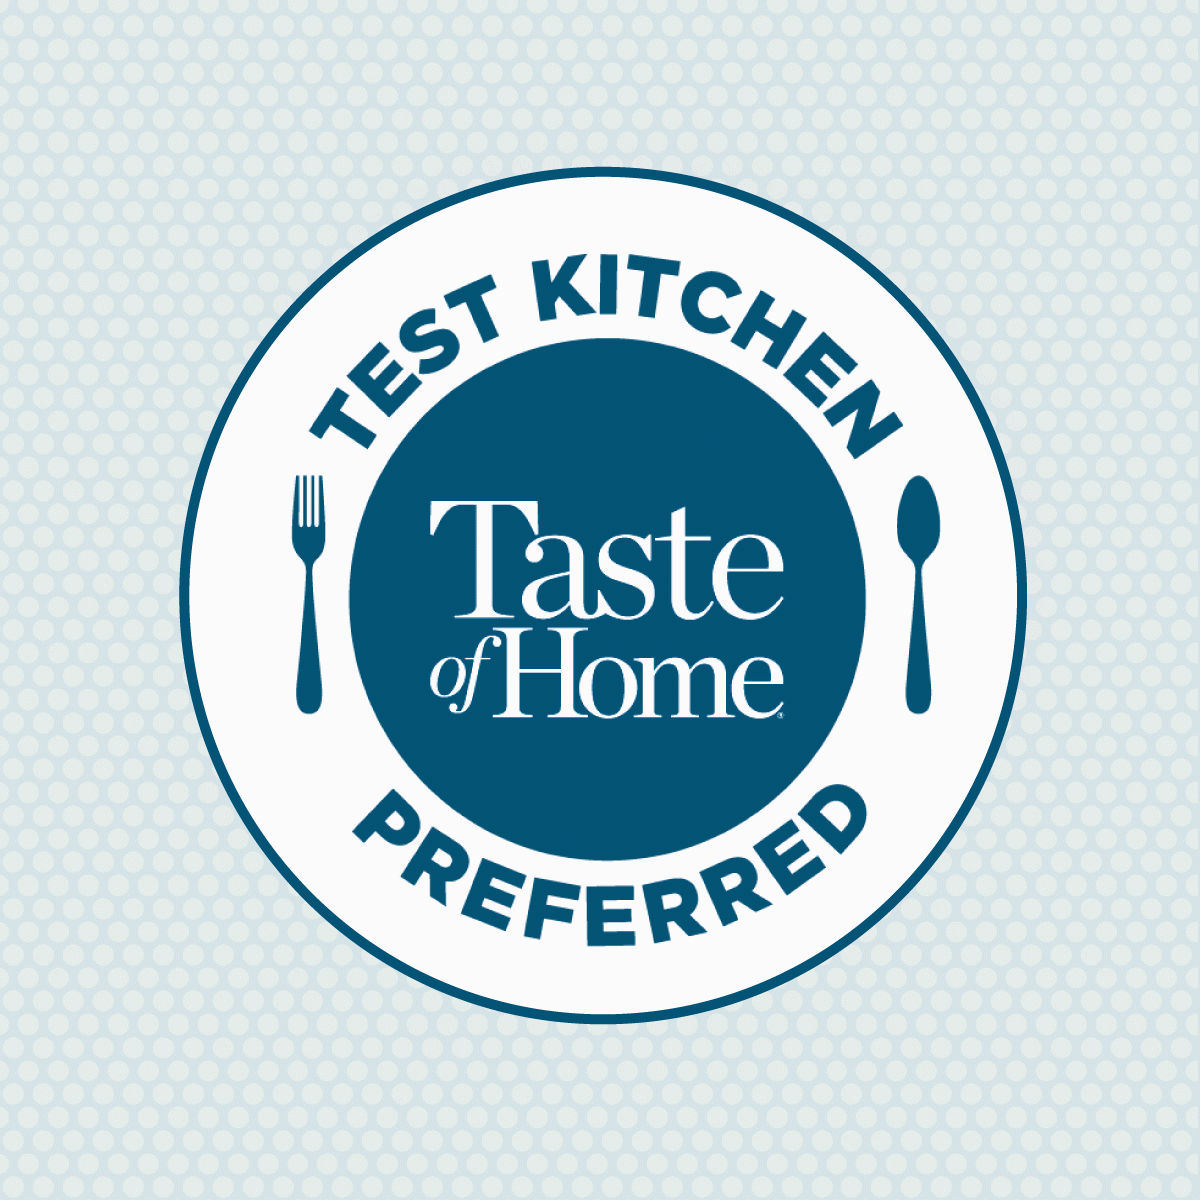 Test Kitchen Preferred Logo